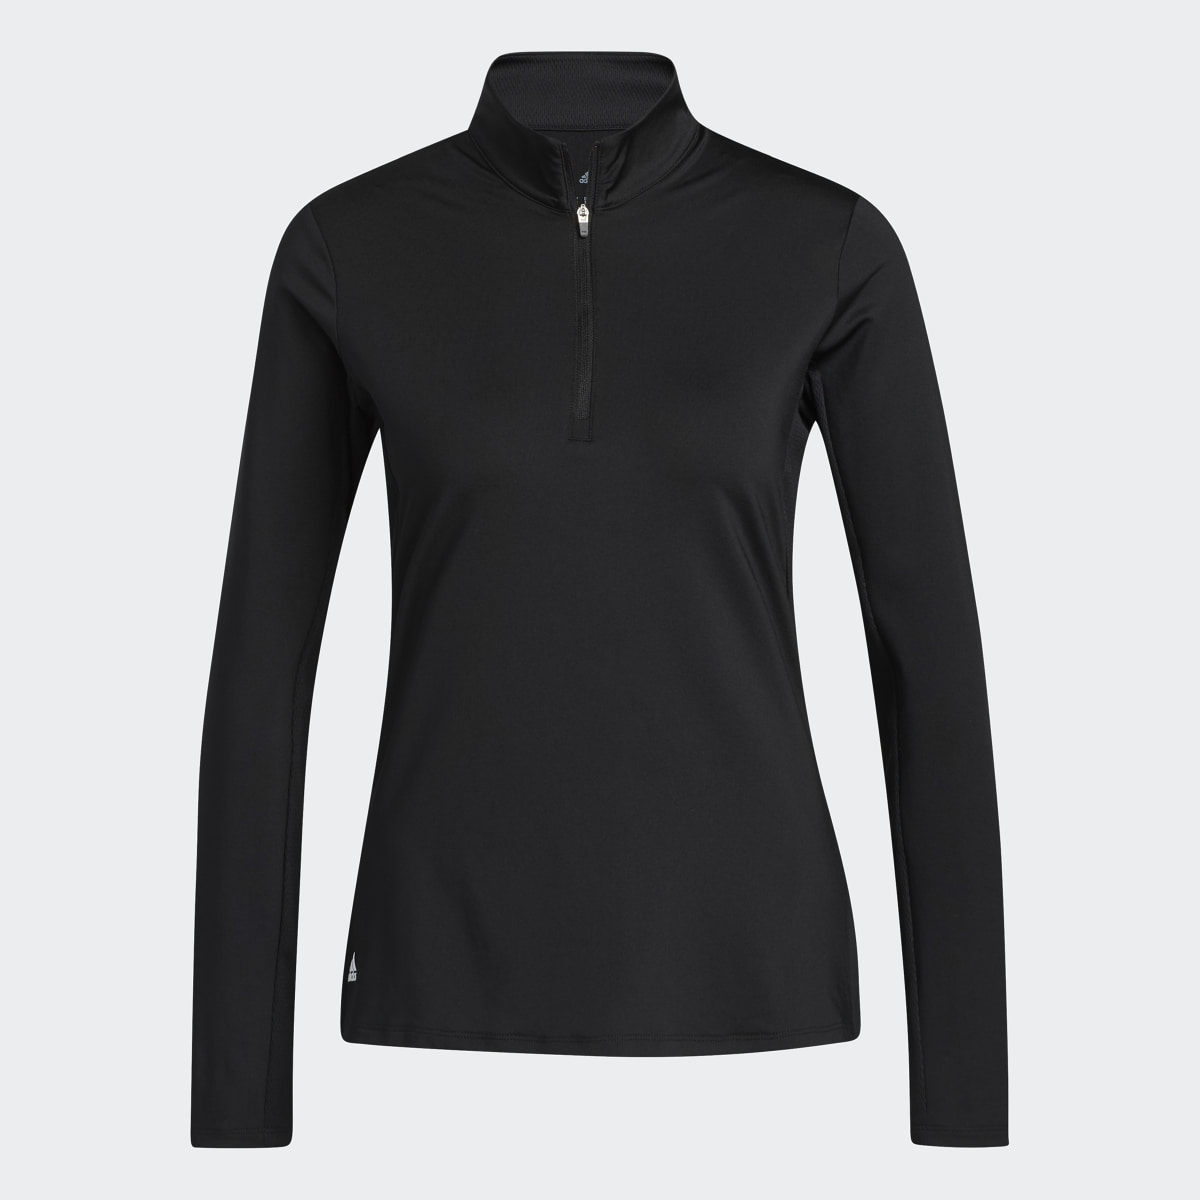 Adidas Ultimate365 Golf Shirt. 5